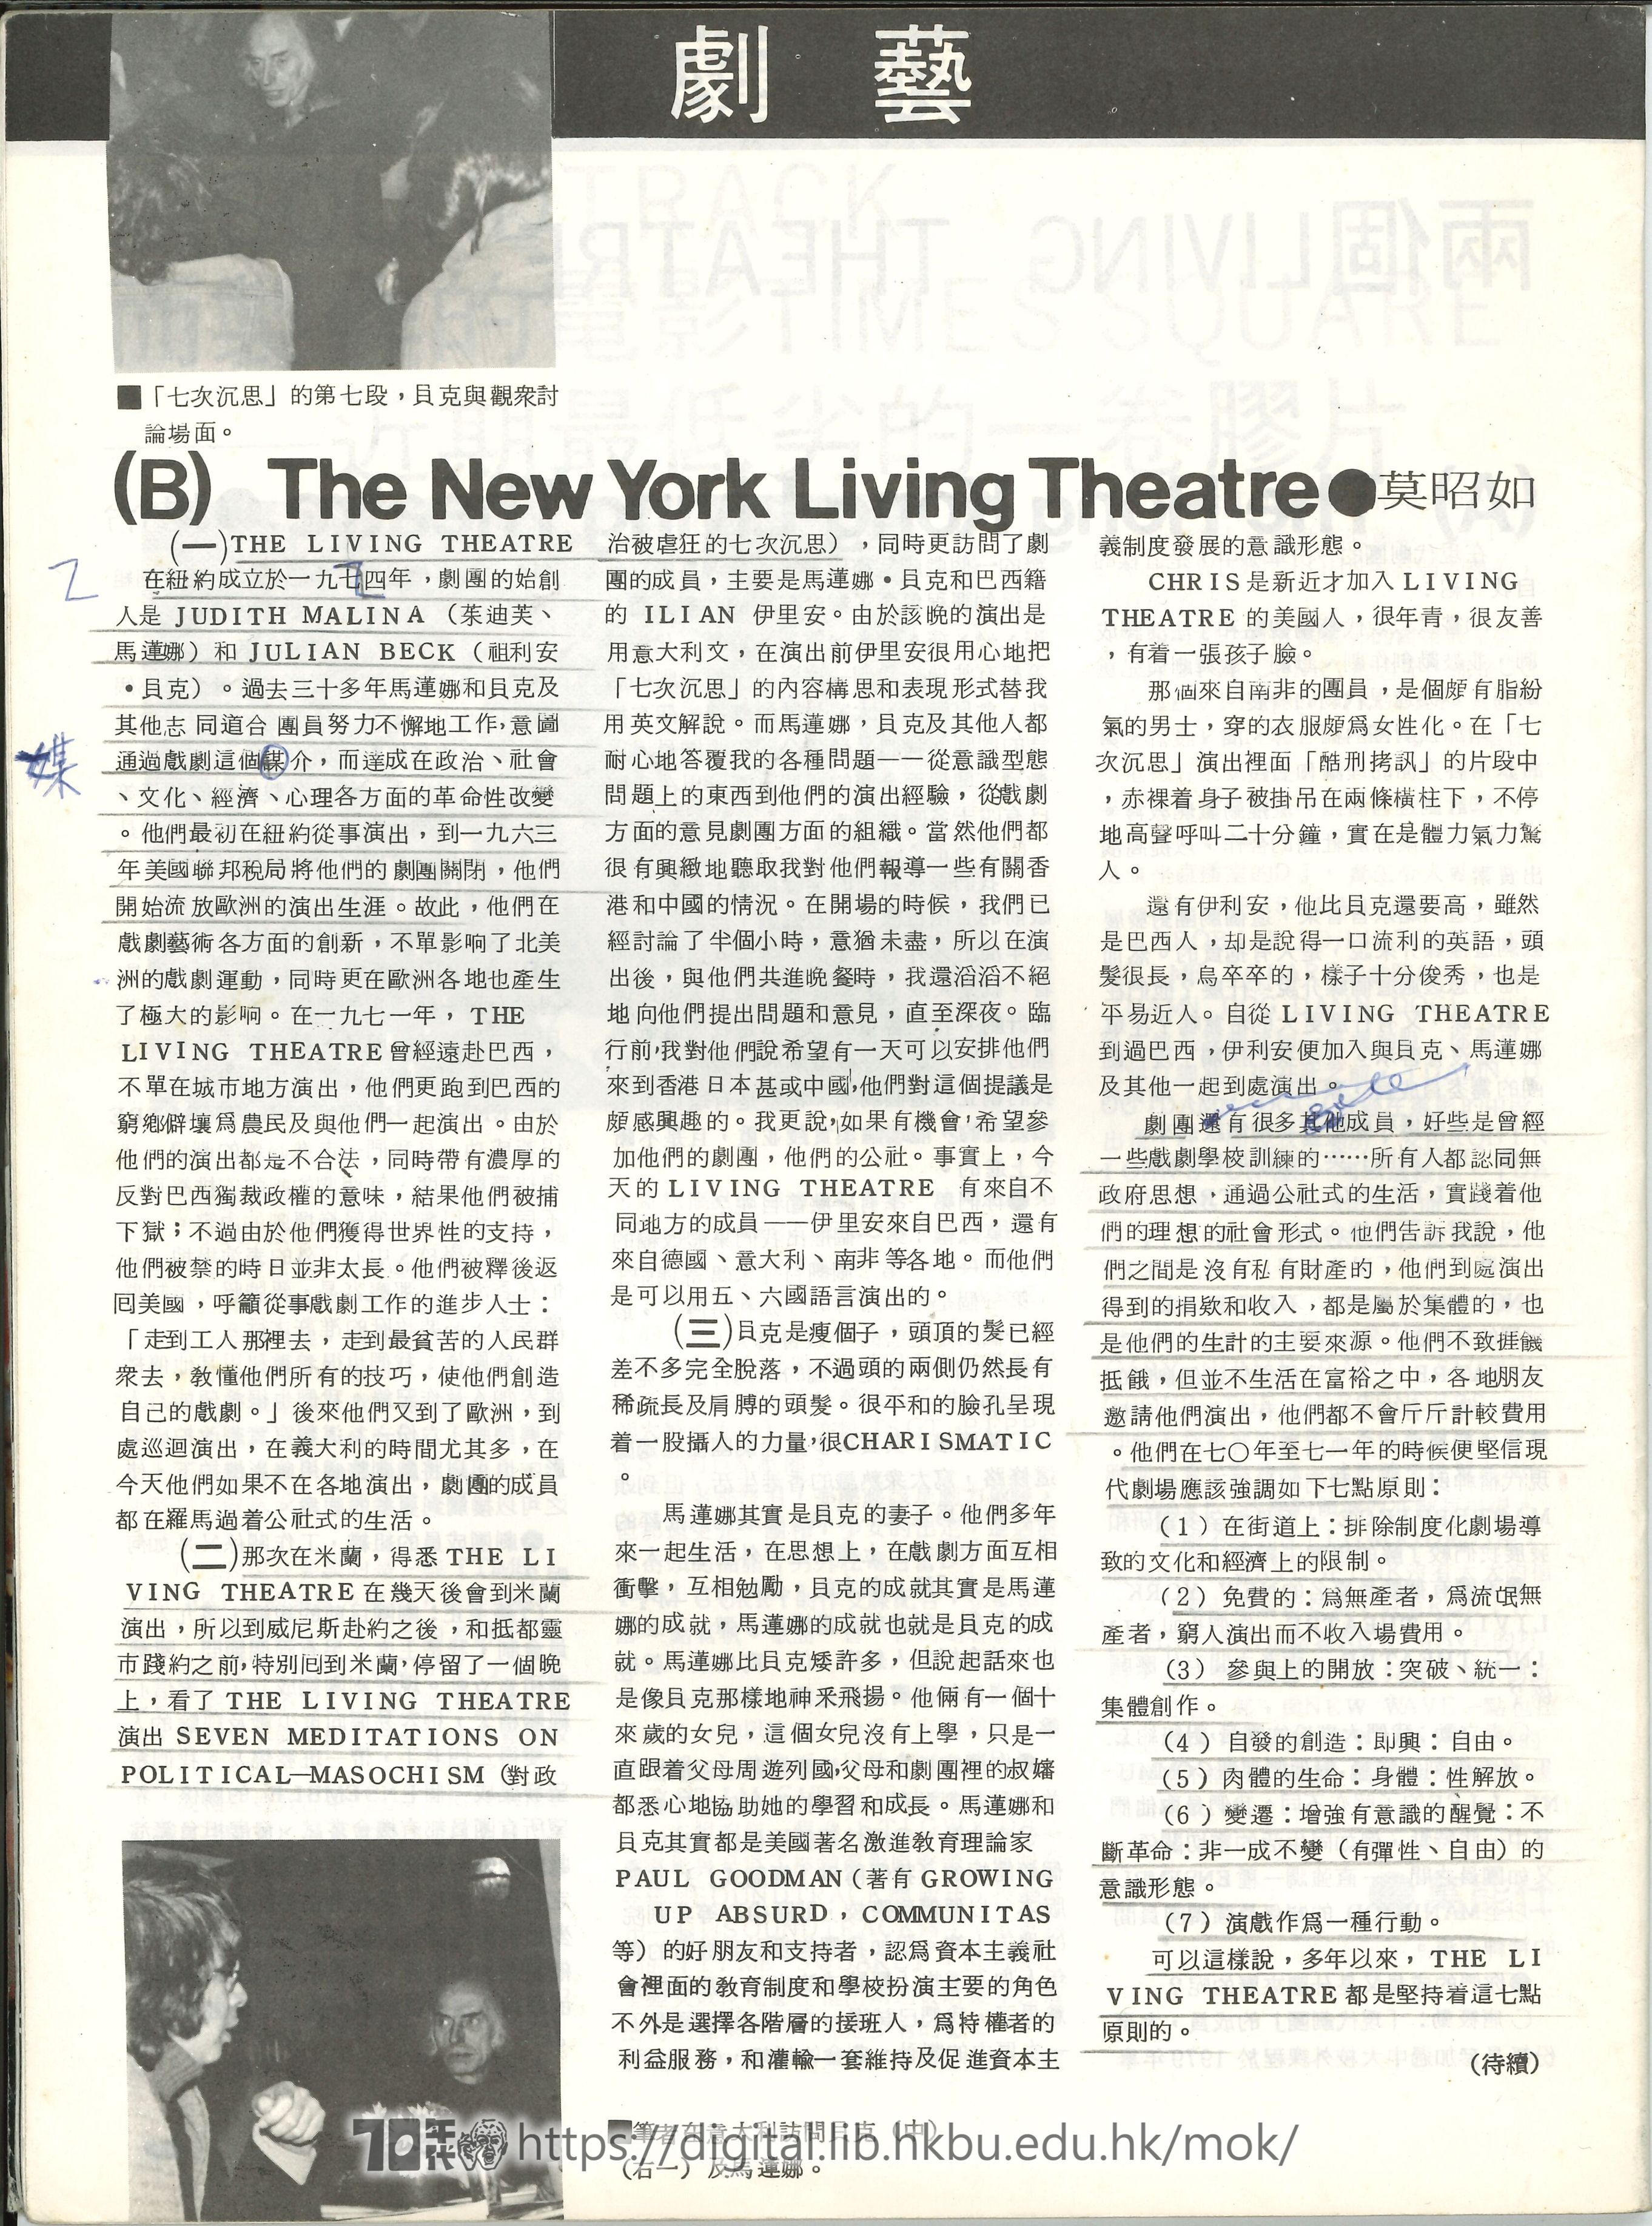   (B) The New York Living Theatre MOK, Chiu Yu 